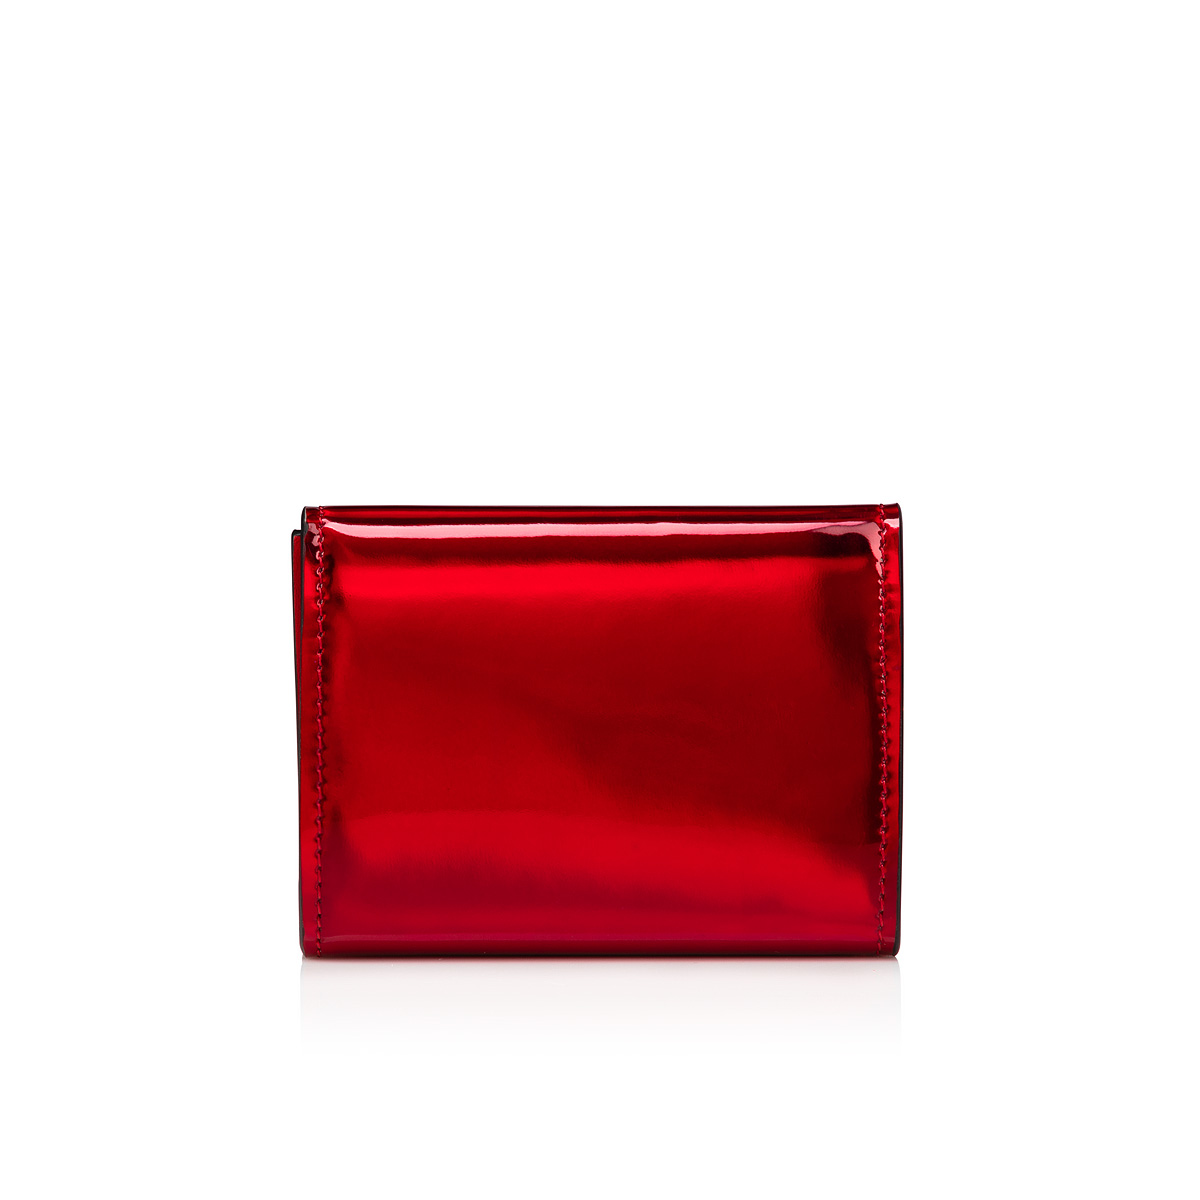 Hard To Find Brand New w/Box Louis Vuitton Red Exotic Snakeskin “Eyeline”  Heels